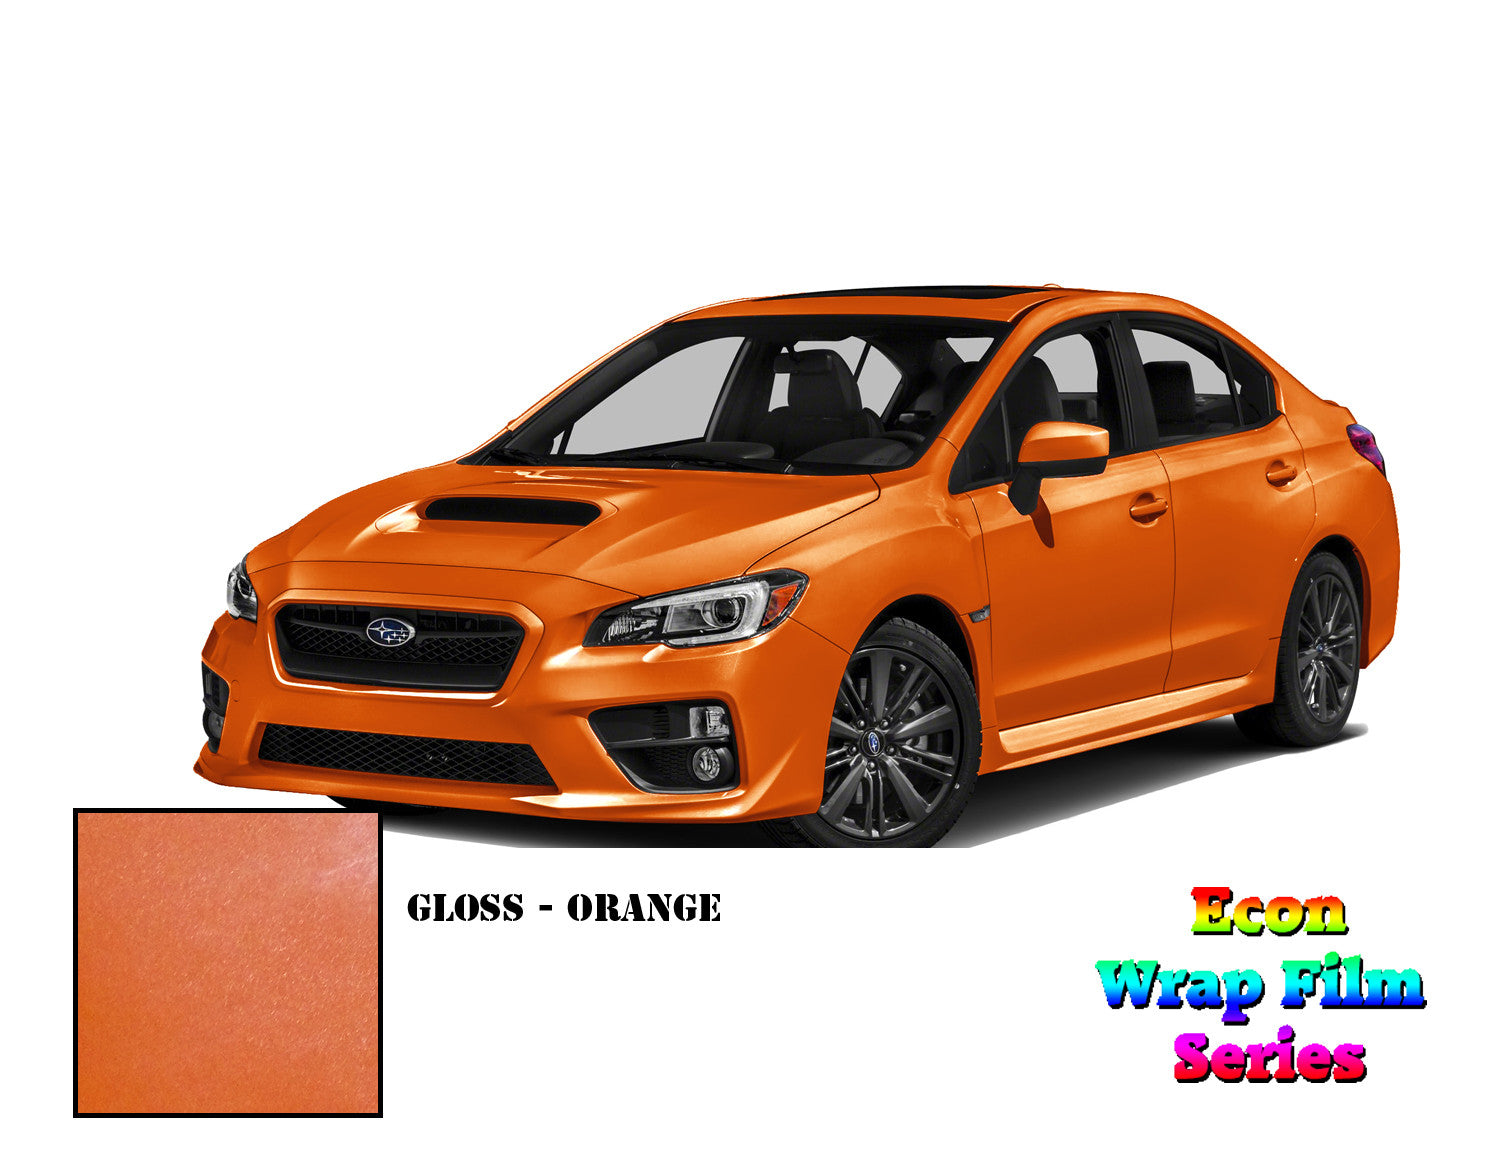 Econ Wrap Film Series - Gloss Orange - Hachi Auto